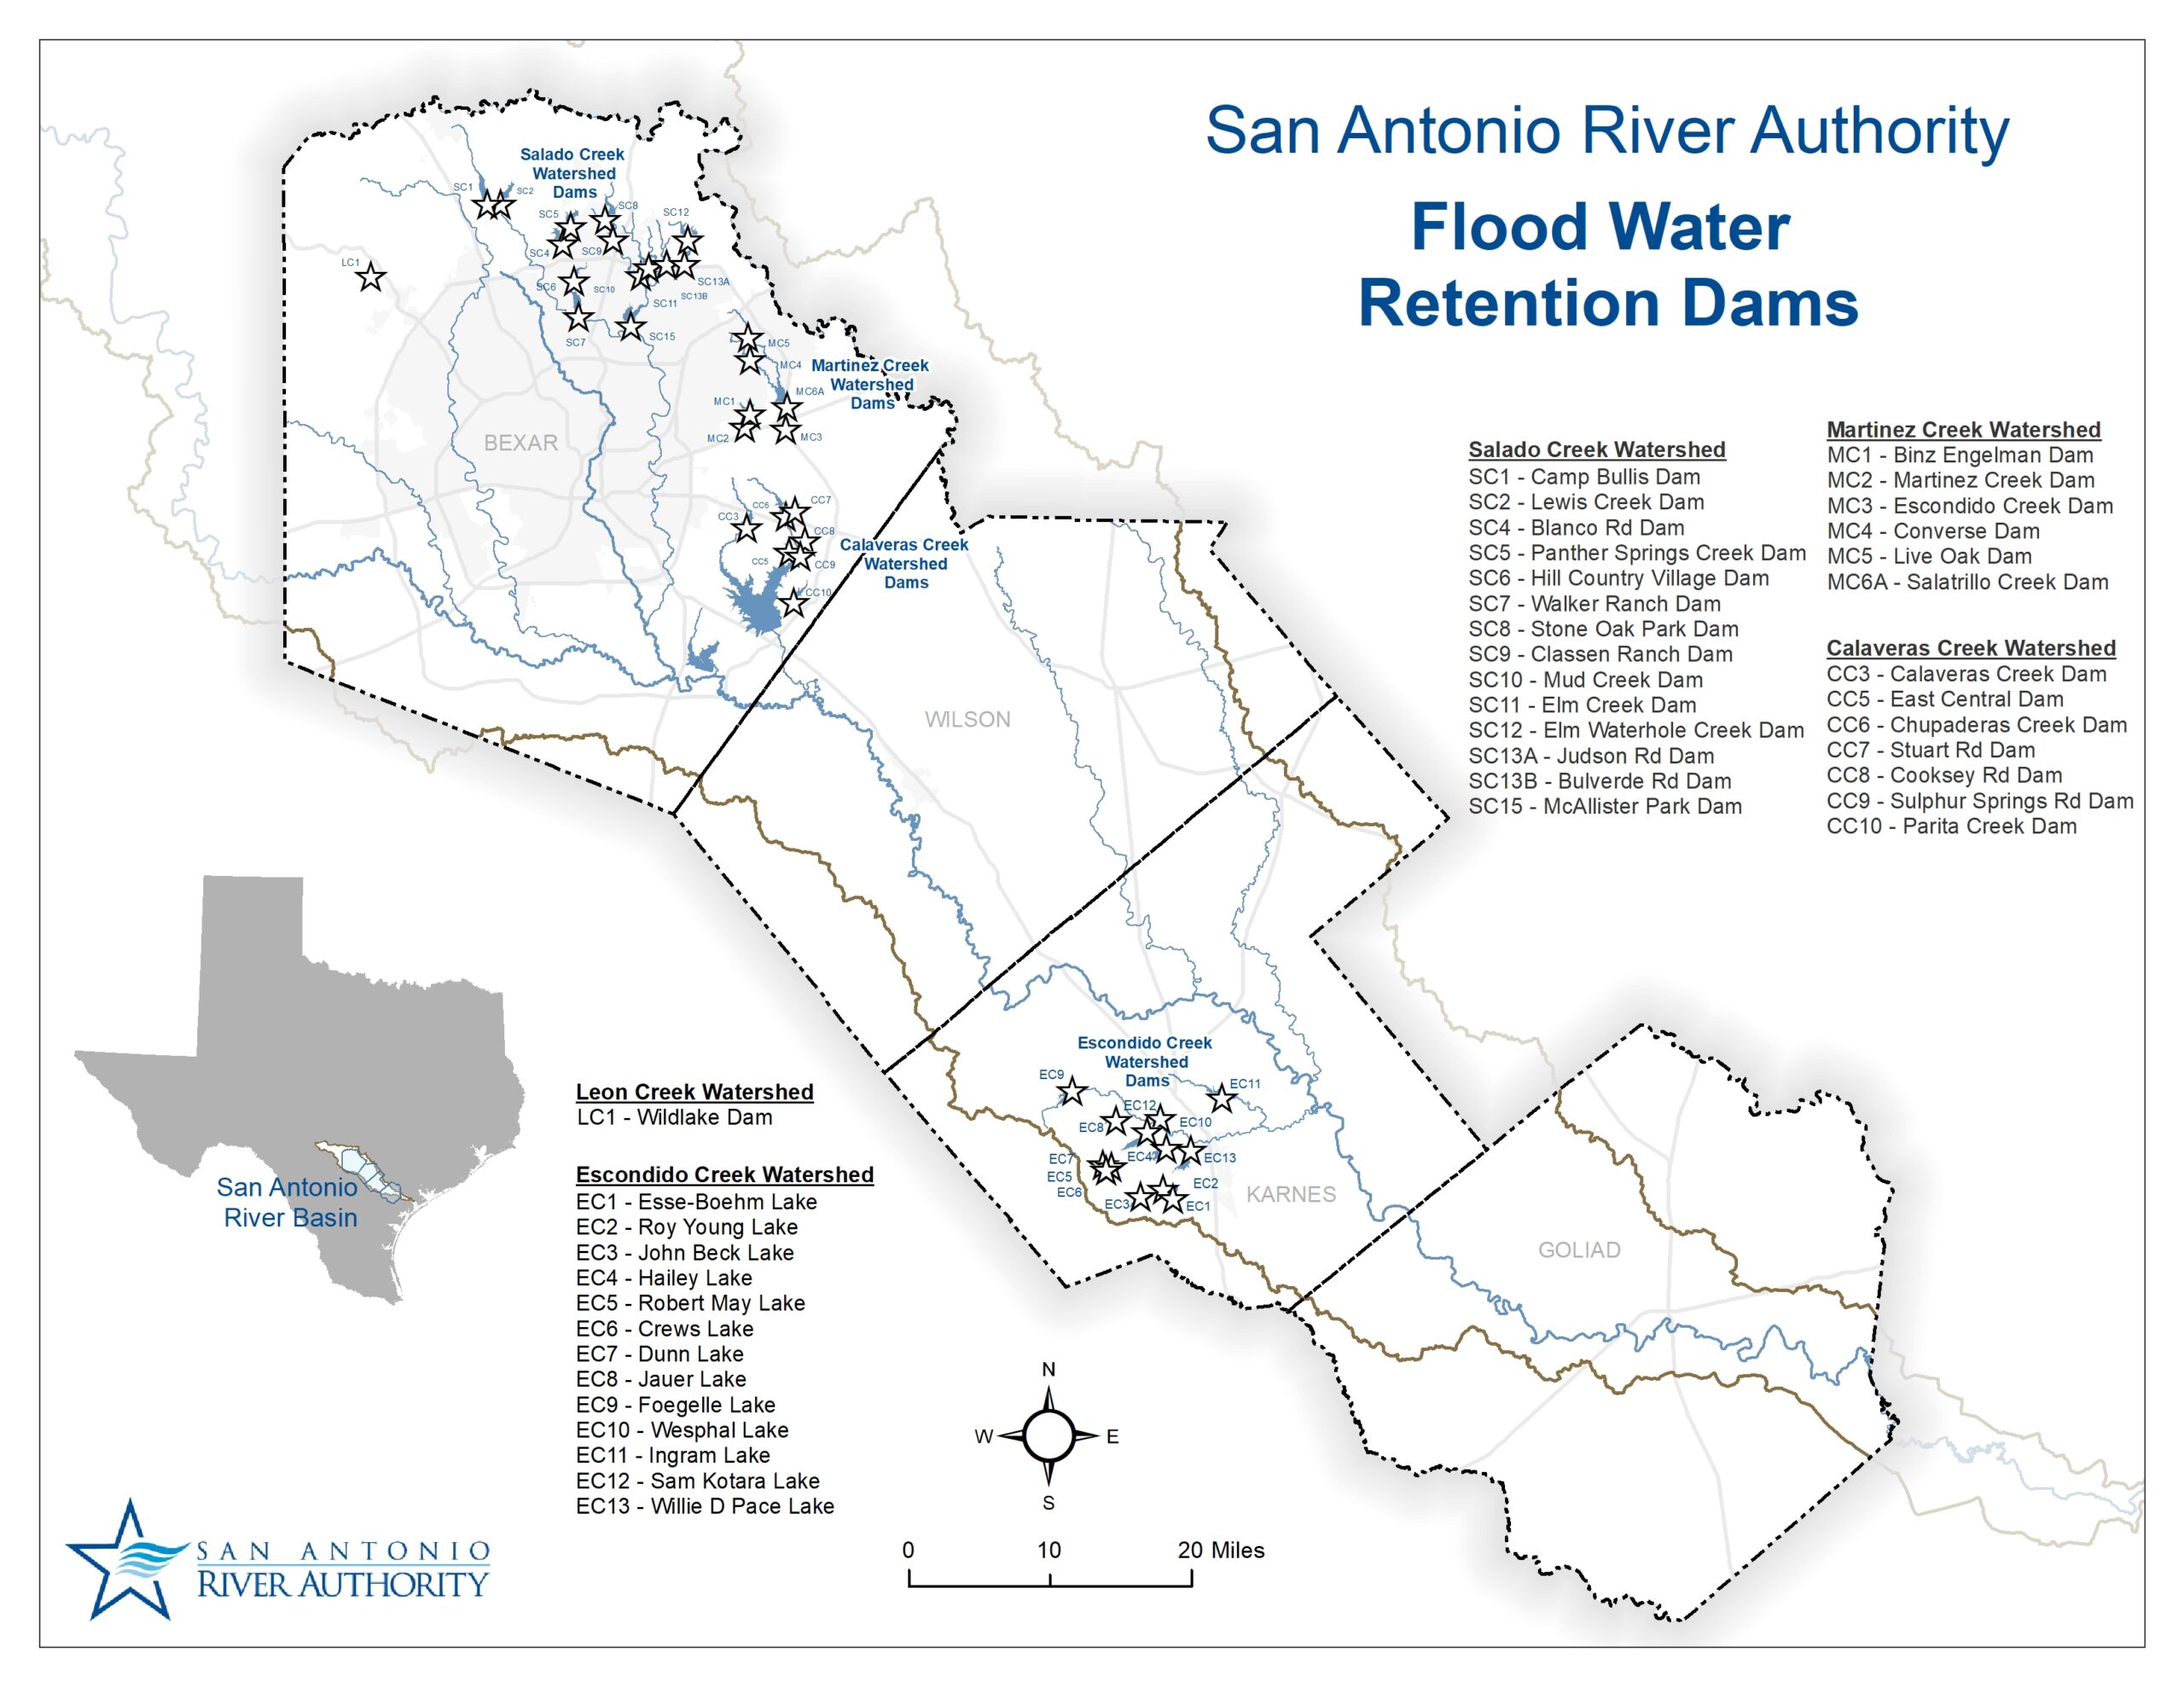 San Antonio River Authority Flood Water Retention Dams